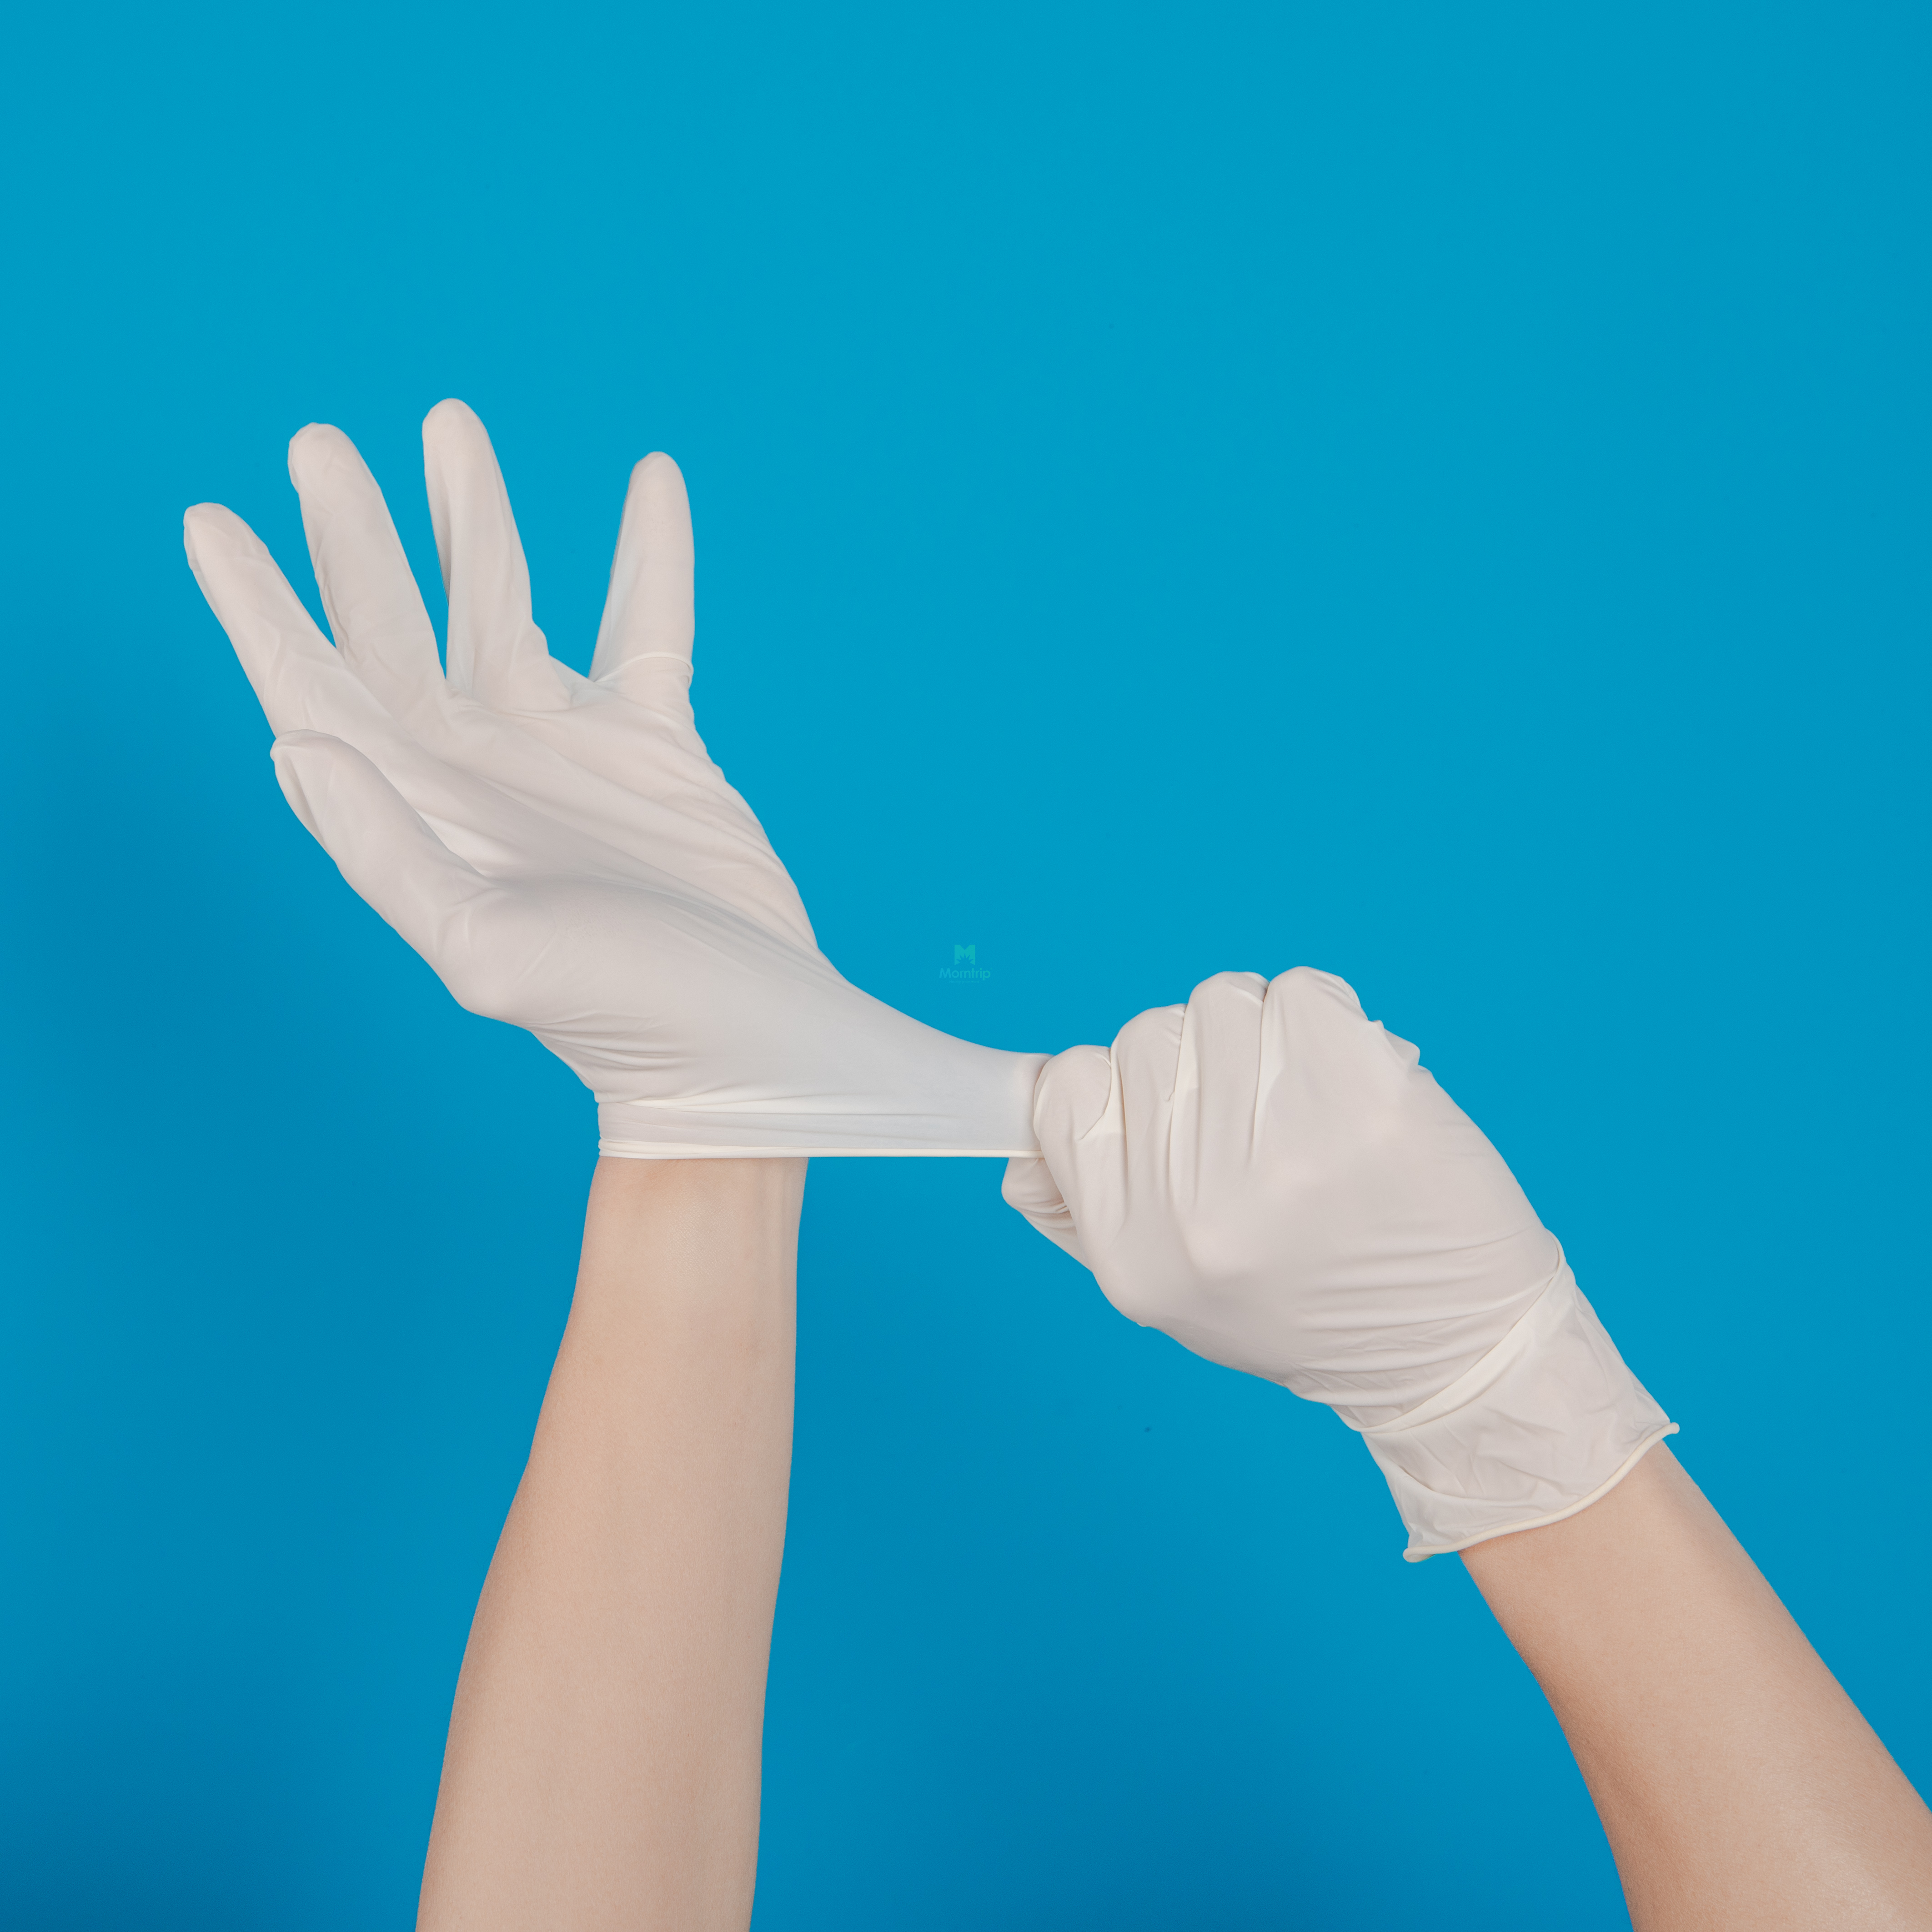 100 Pcs Clean Powder Free Waterproof Disposable Examination Latex Gloves